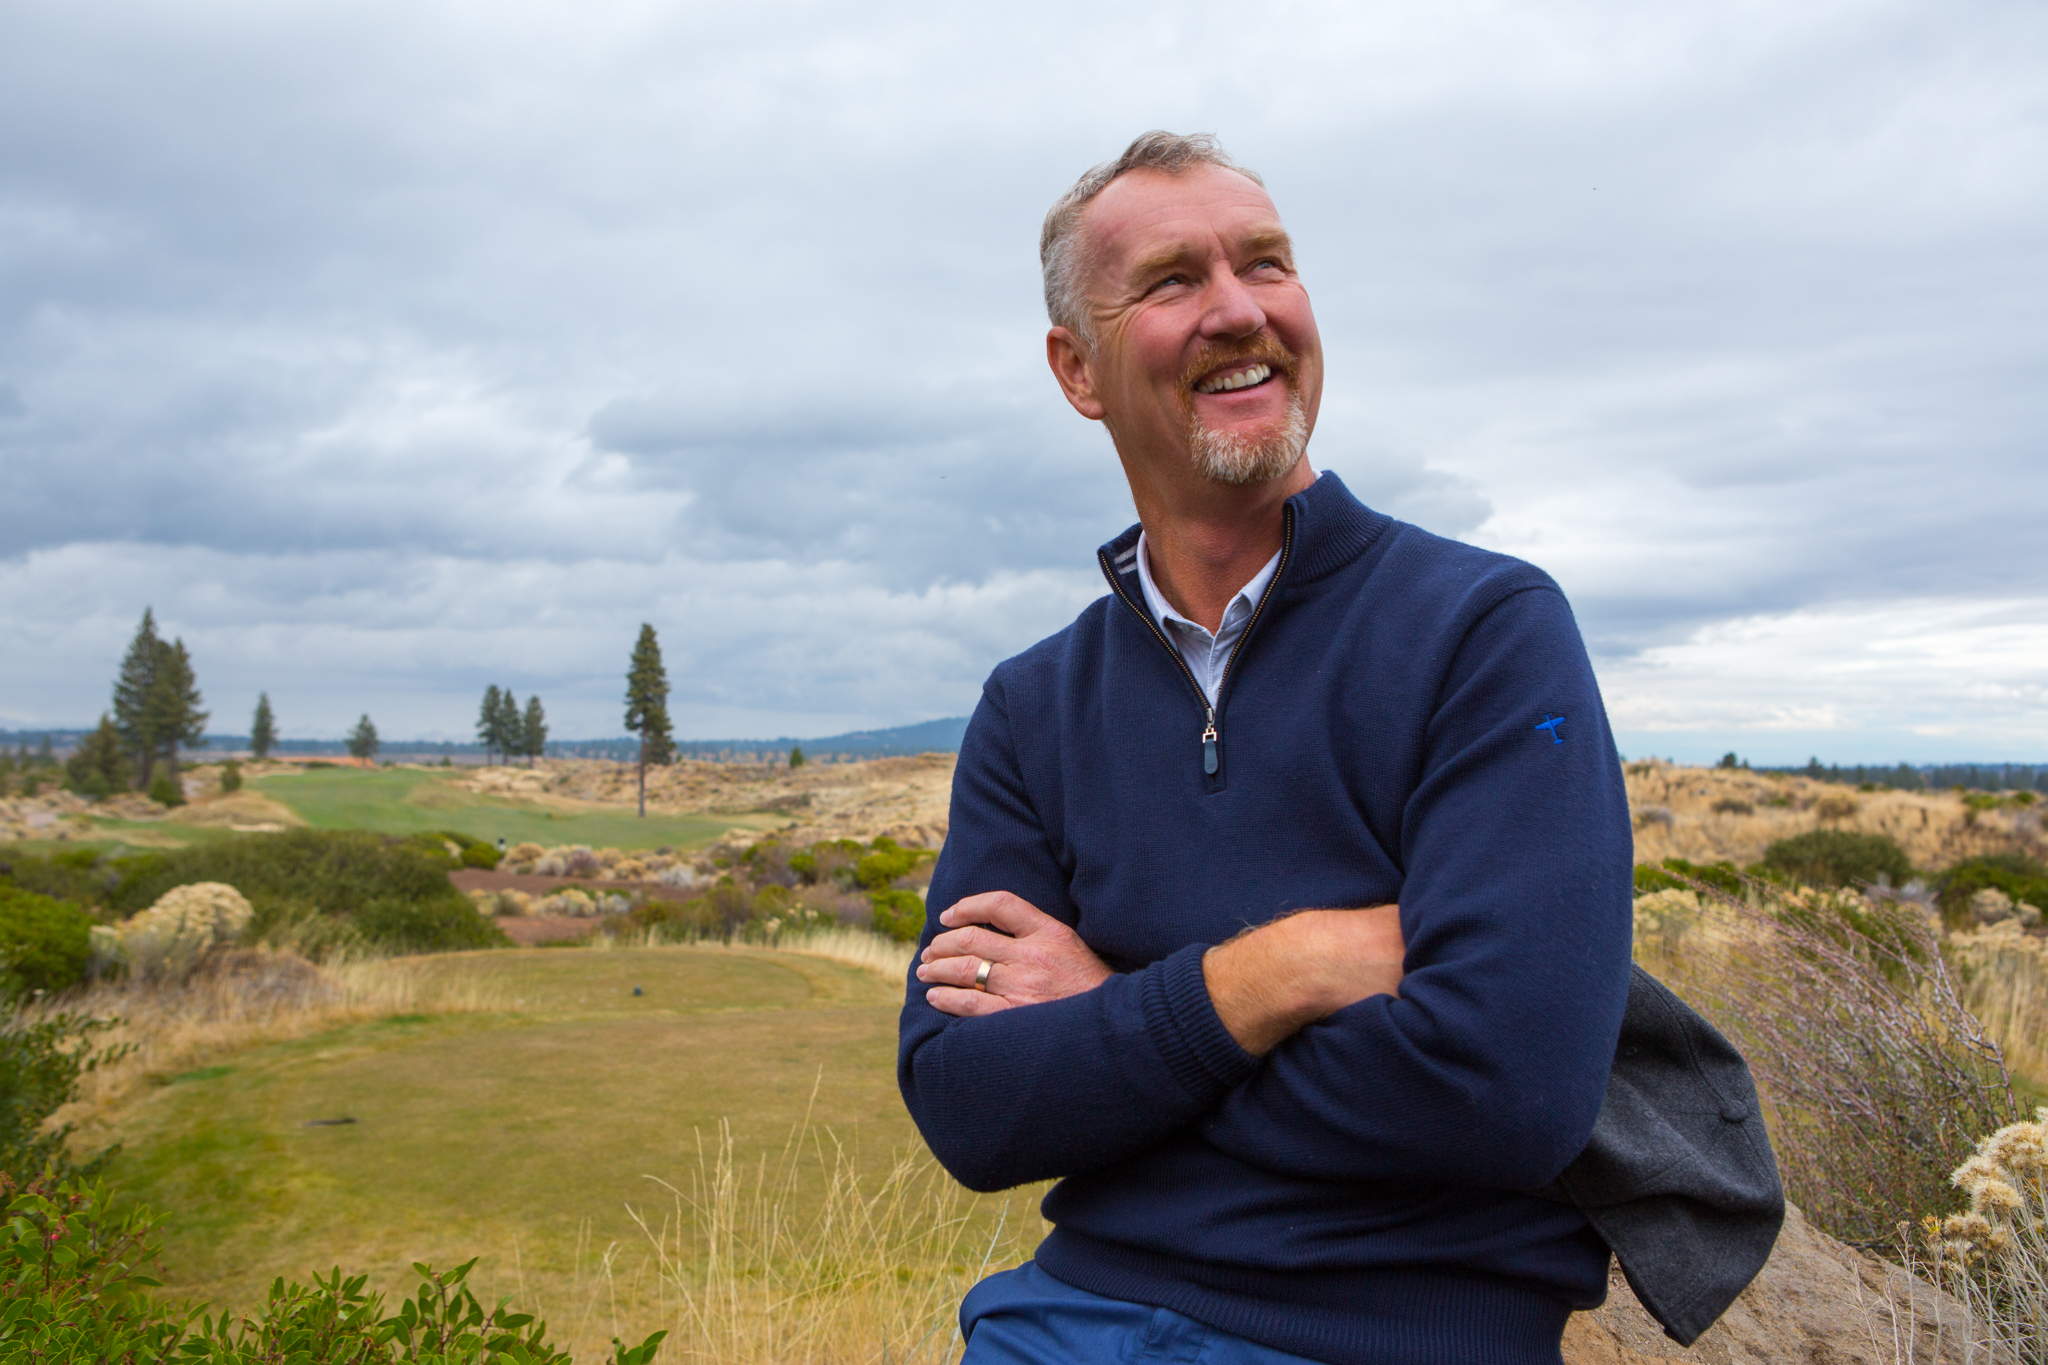 David McLay Kidd: Famed golf architect thriving in Oregon